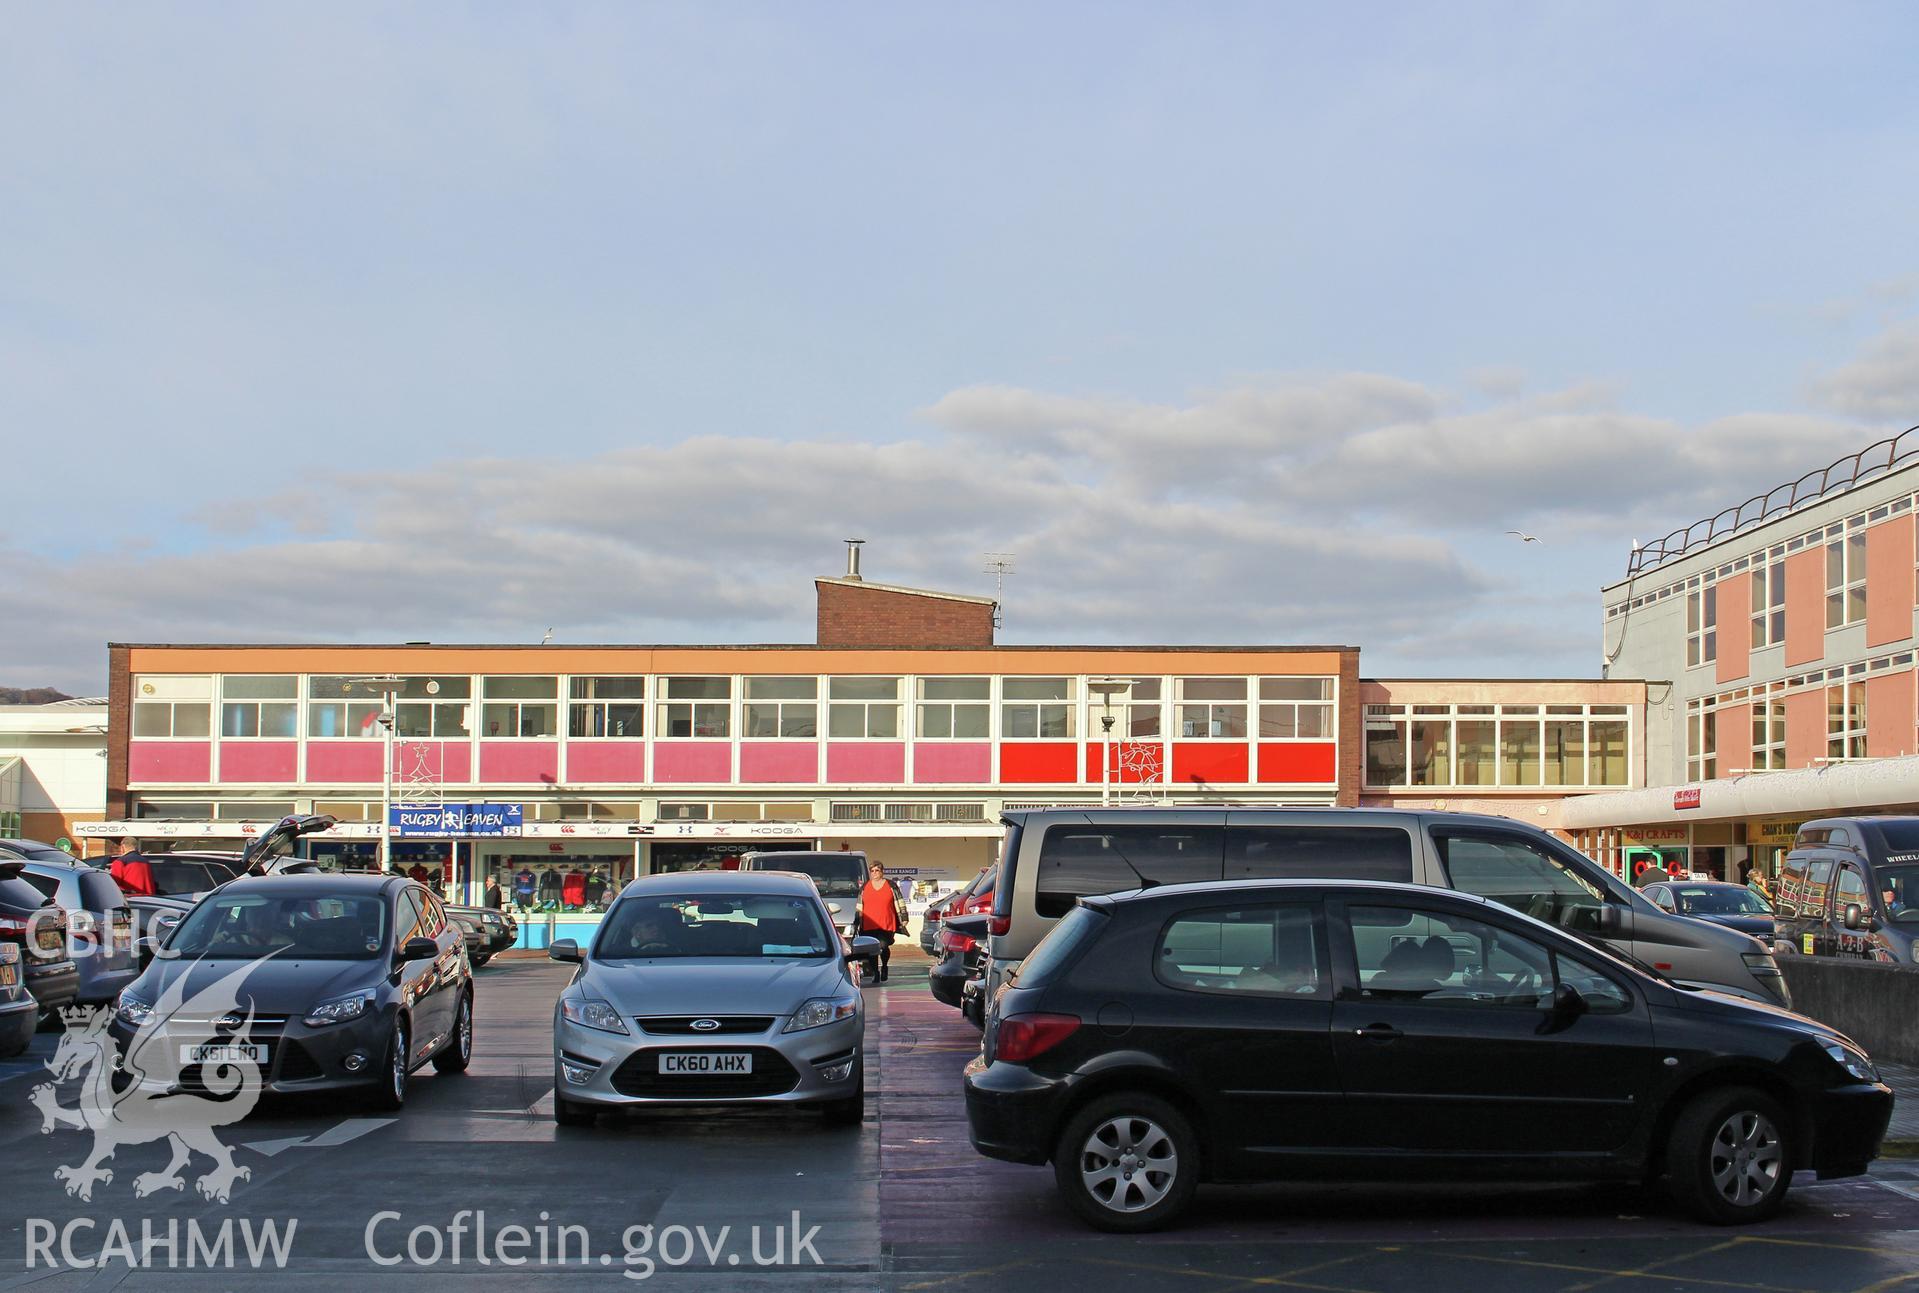 Exterior view of Cwmbran Shopping Centre's car park. Photograph taken by Sue Fielding in November 2017.